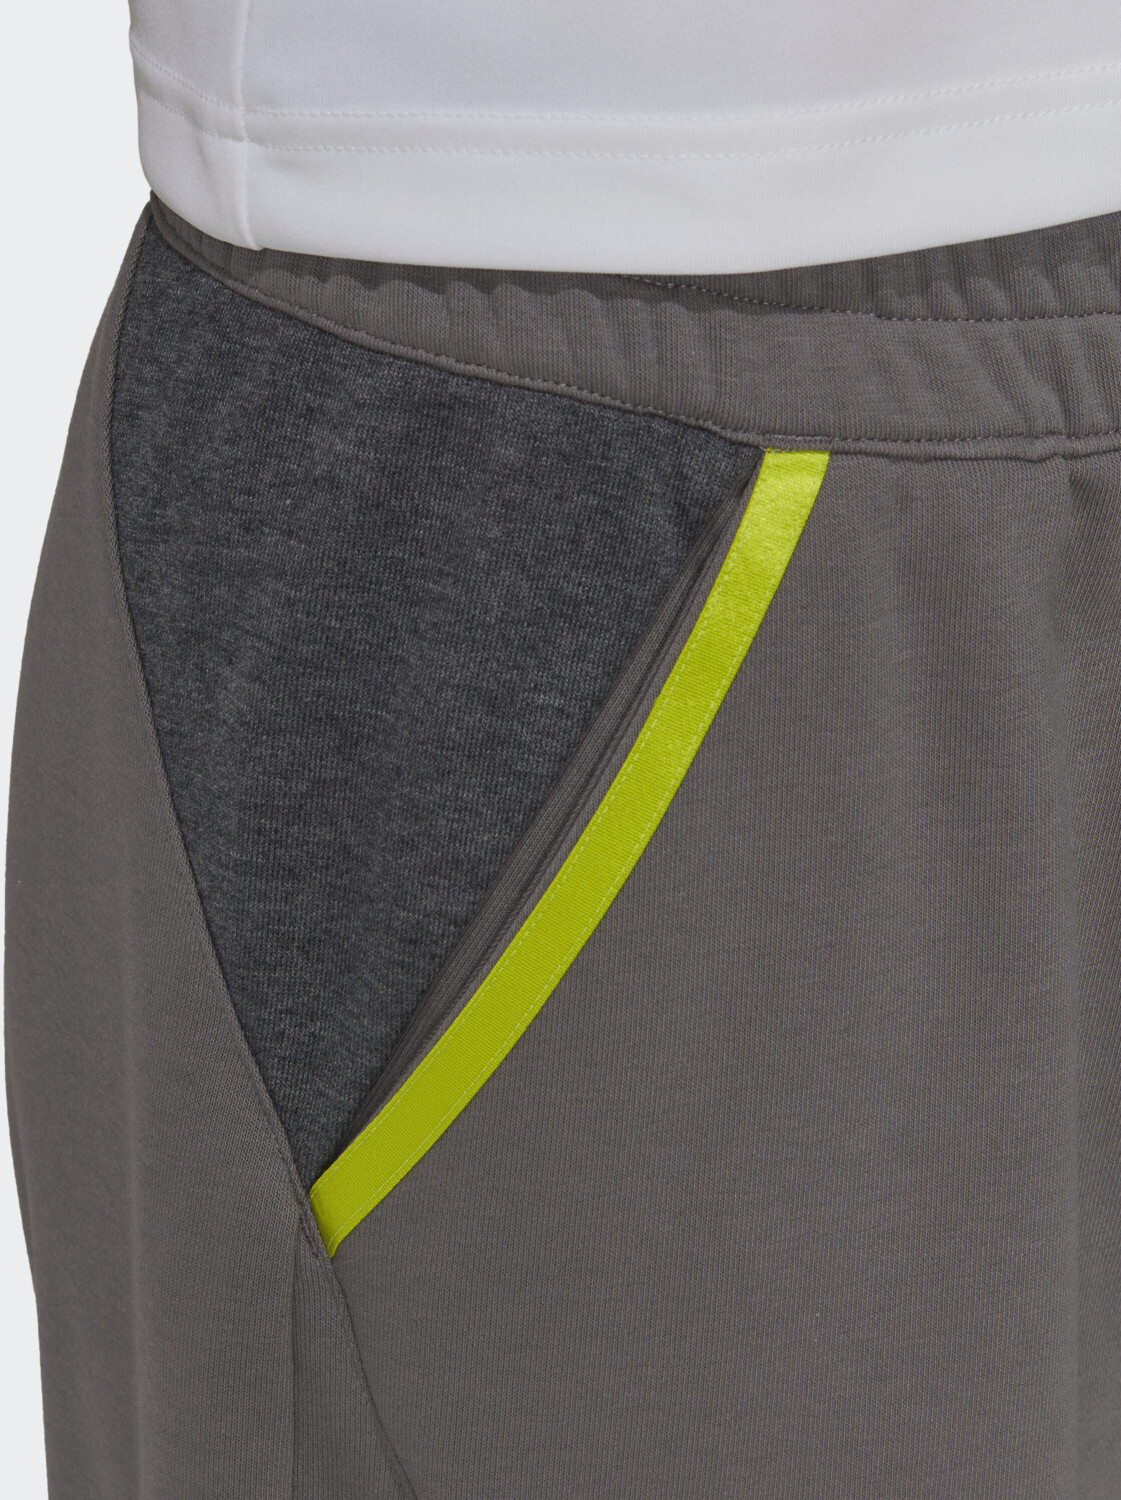 Adidas Woman Condivo ab Jogging grey € bei Preisvergleich | Pants four 22 21,25 (HD2294) team